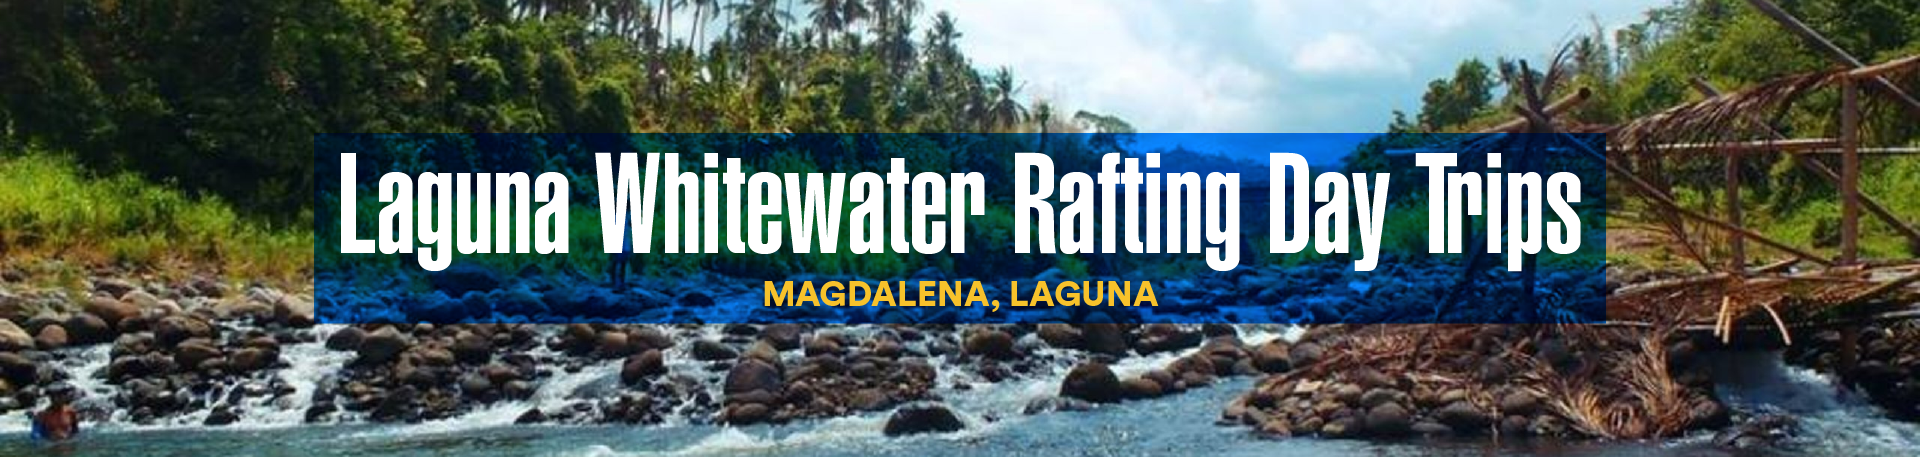 Laguna Whitewater Rafting, Magdalena, Laguna